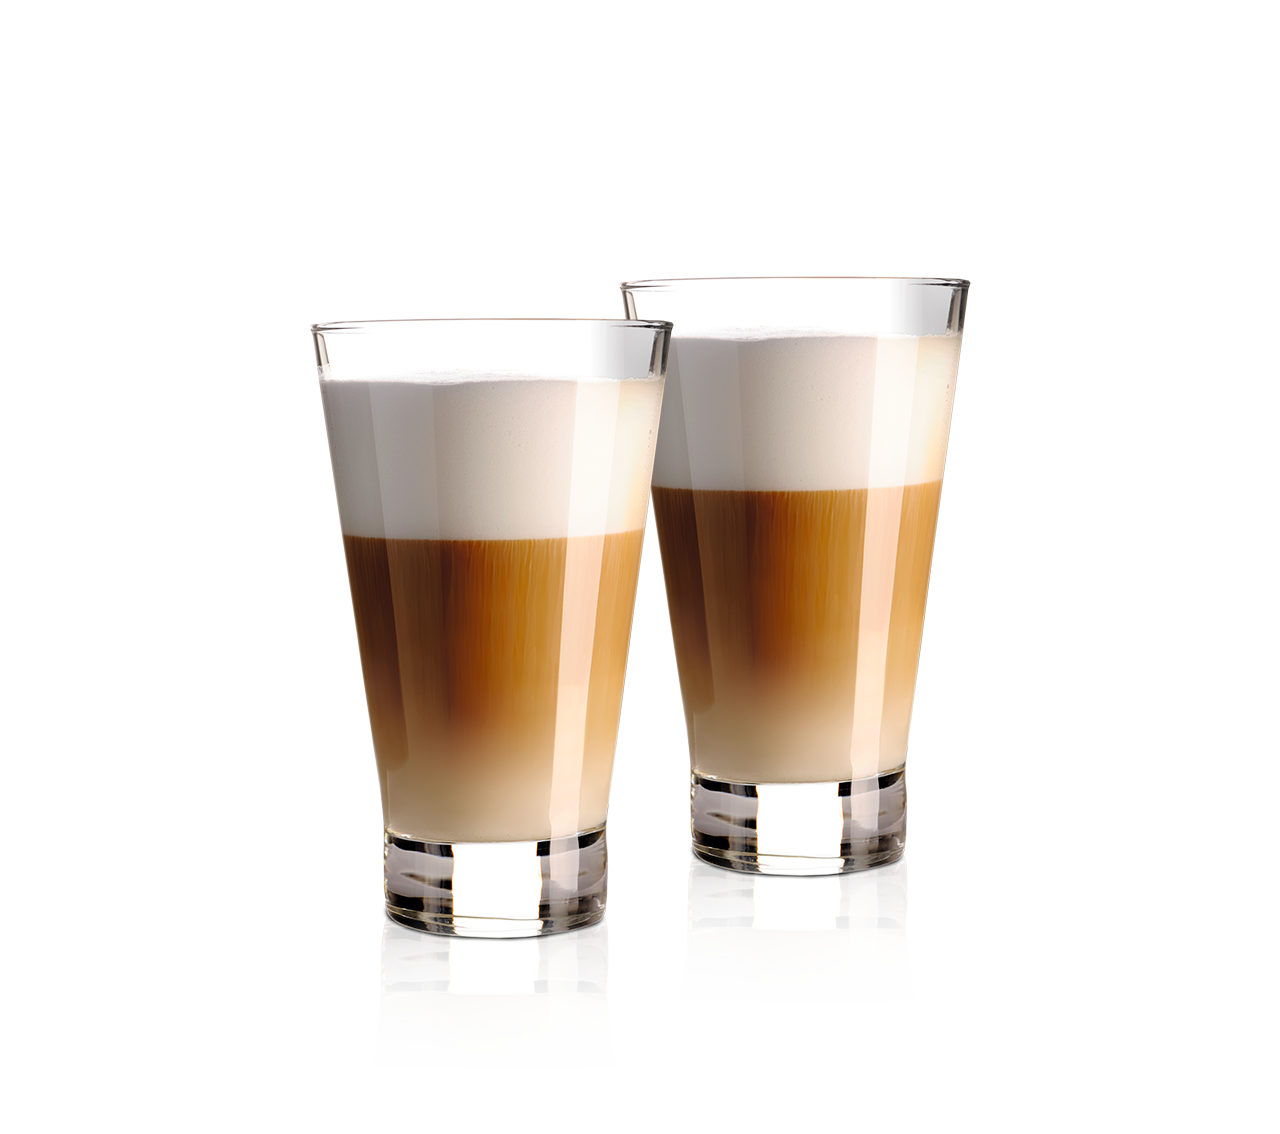 https://www.cremesso.com/media/image/45/b3/d9/latte-macchiato-glasses.png